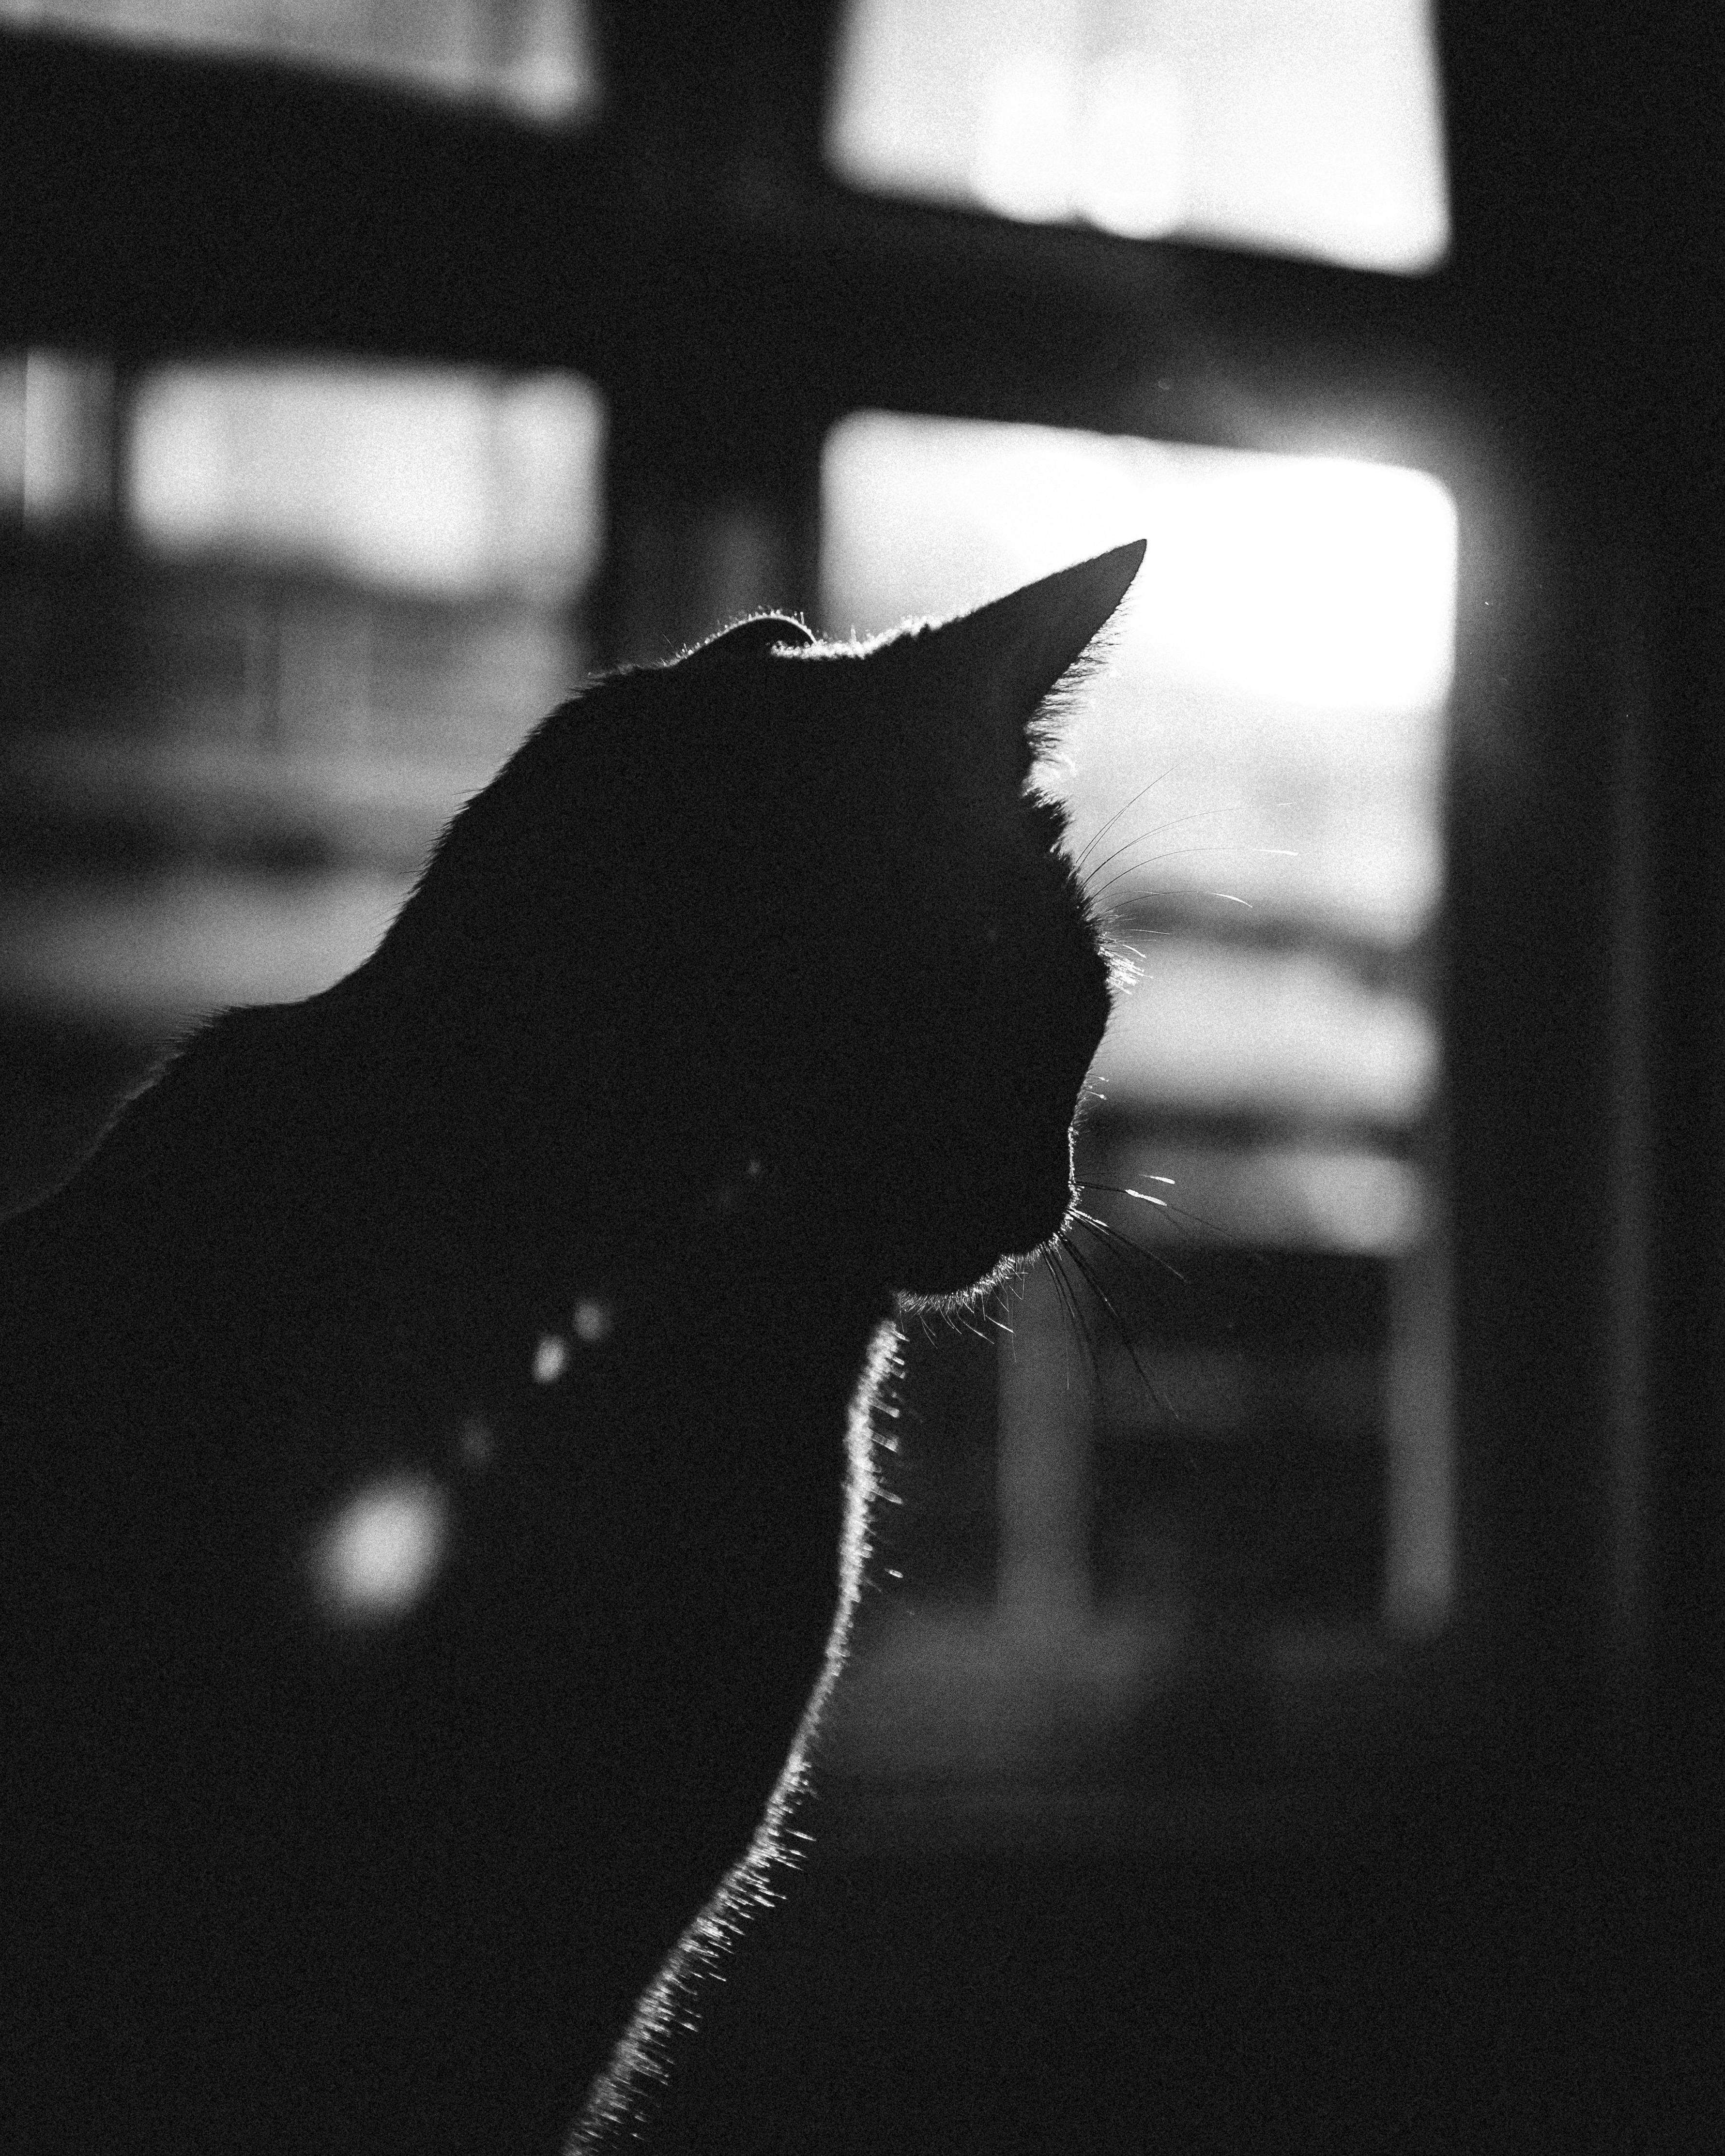 200,000+ Best Black Cat Photos · 100% Free Download · Pexels Stock Photos